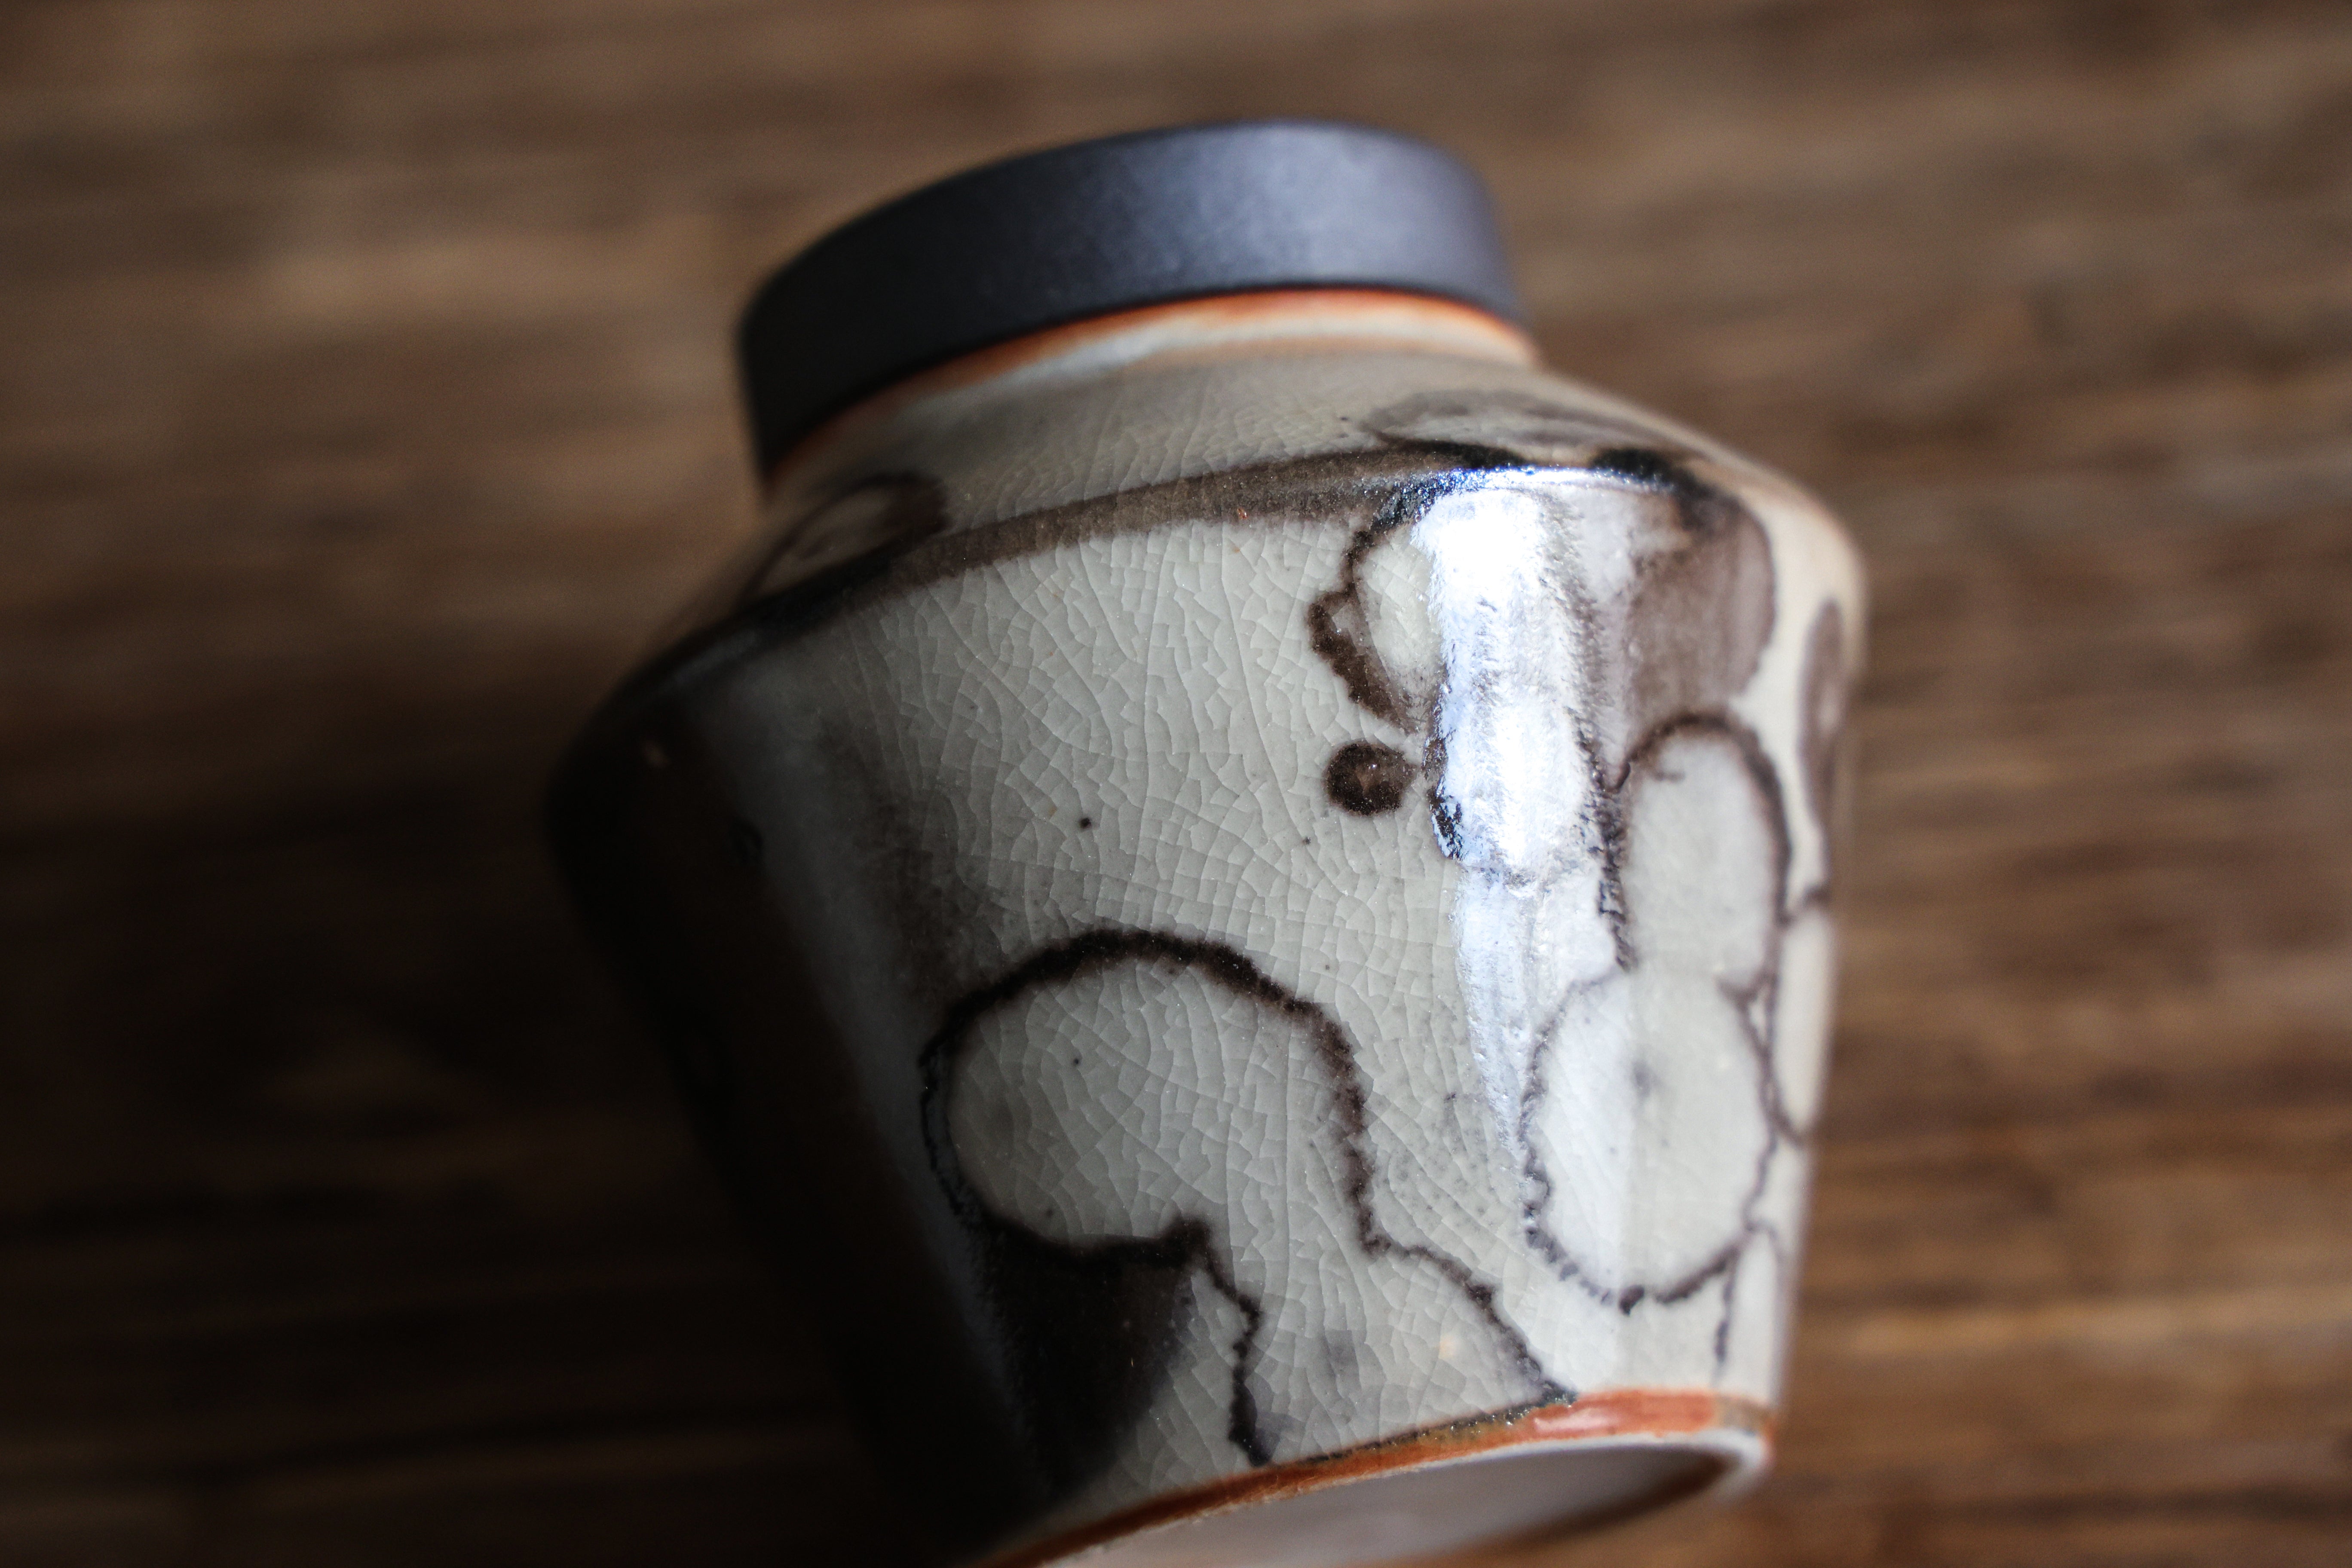 Ink Shino Tea Jar